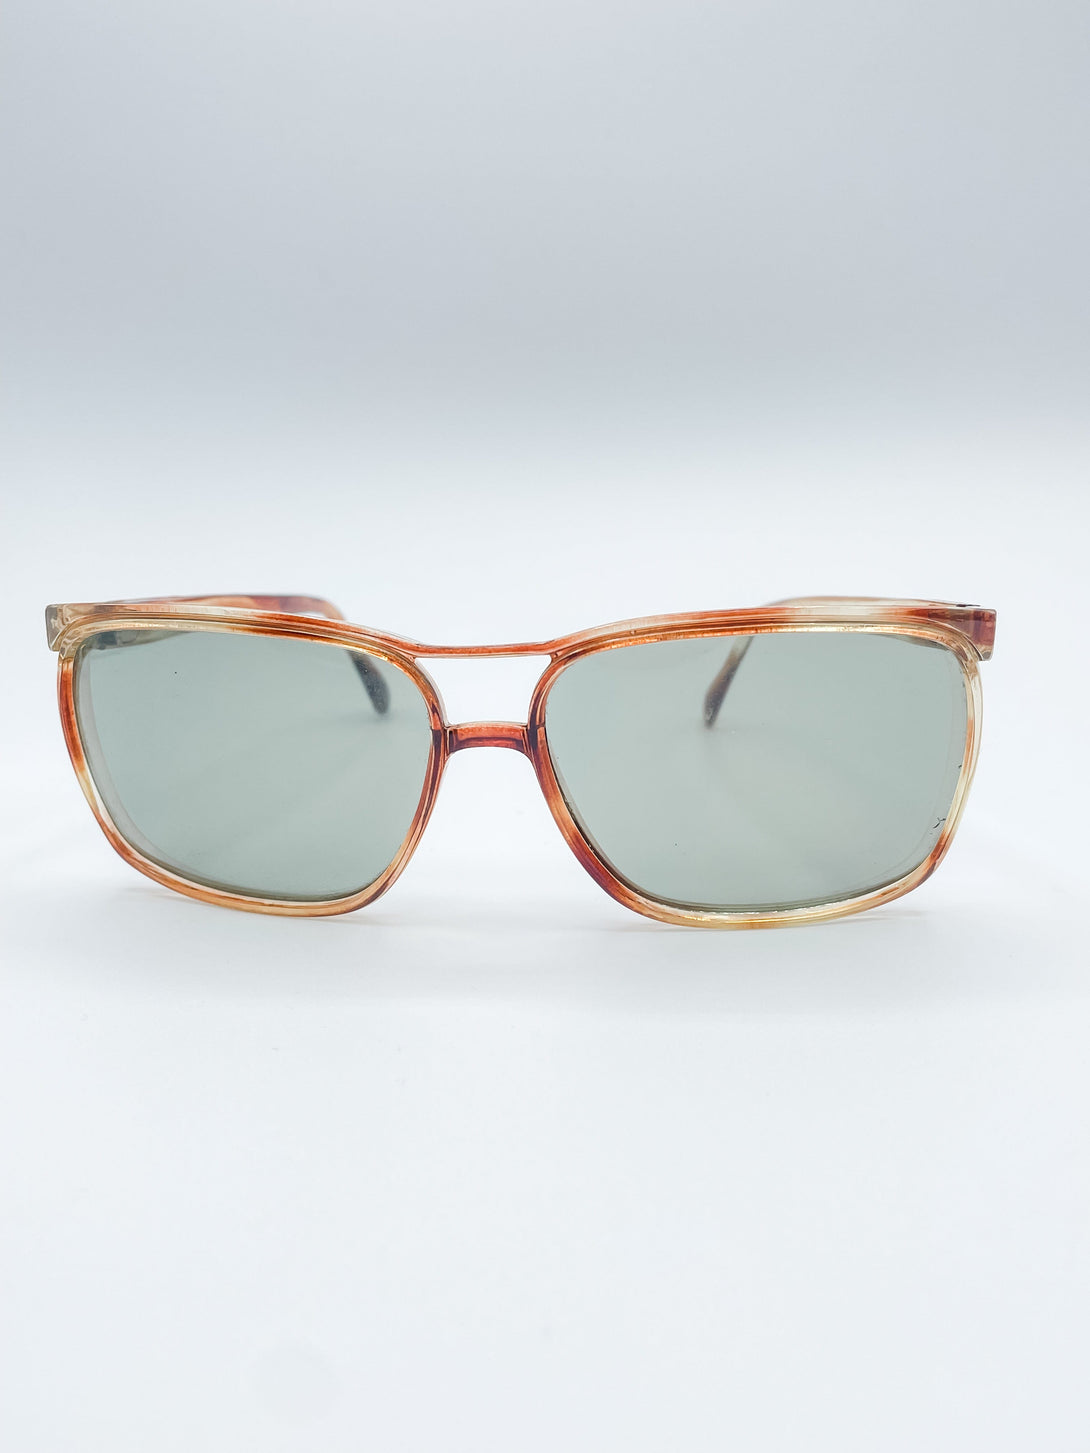 Vintage French Aviator Style Light Tortoiseshell Sunglasses with Solid Dark Lens